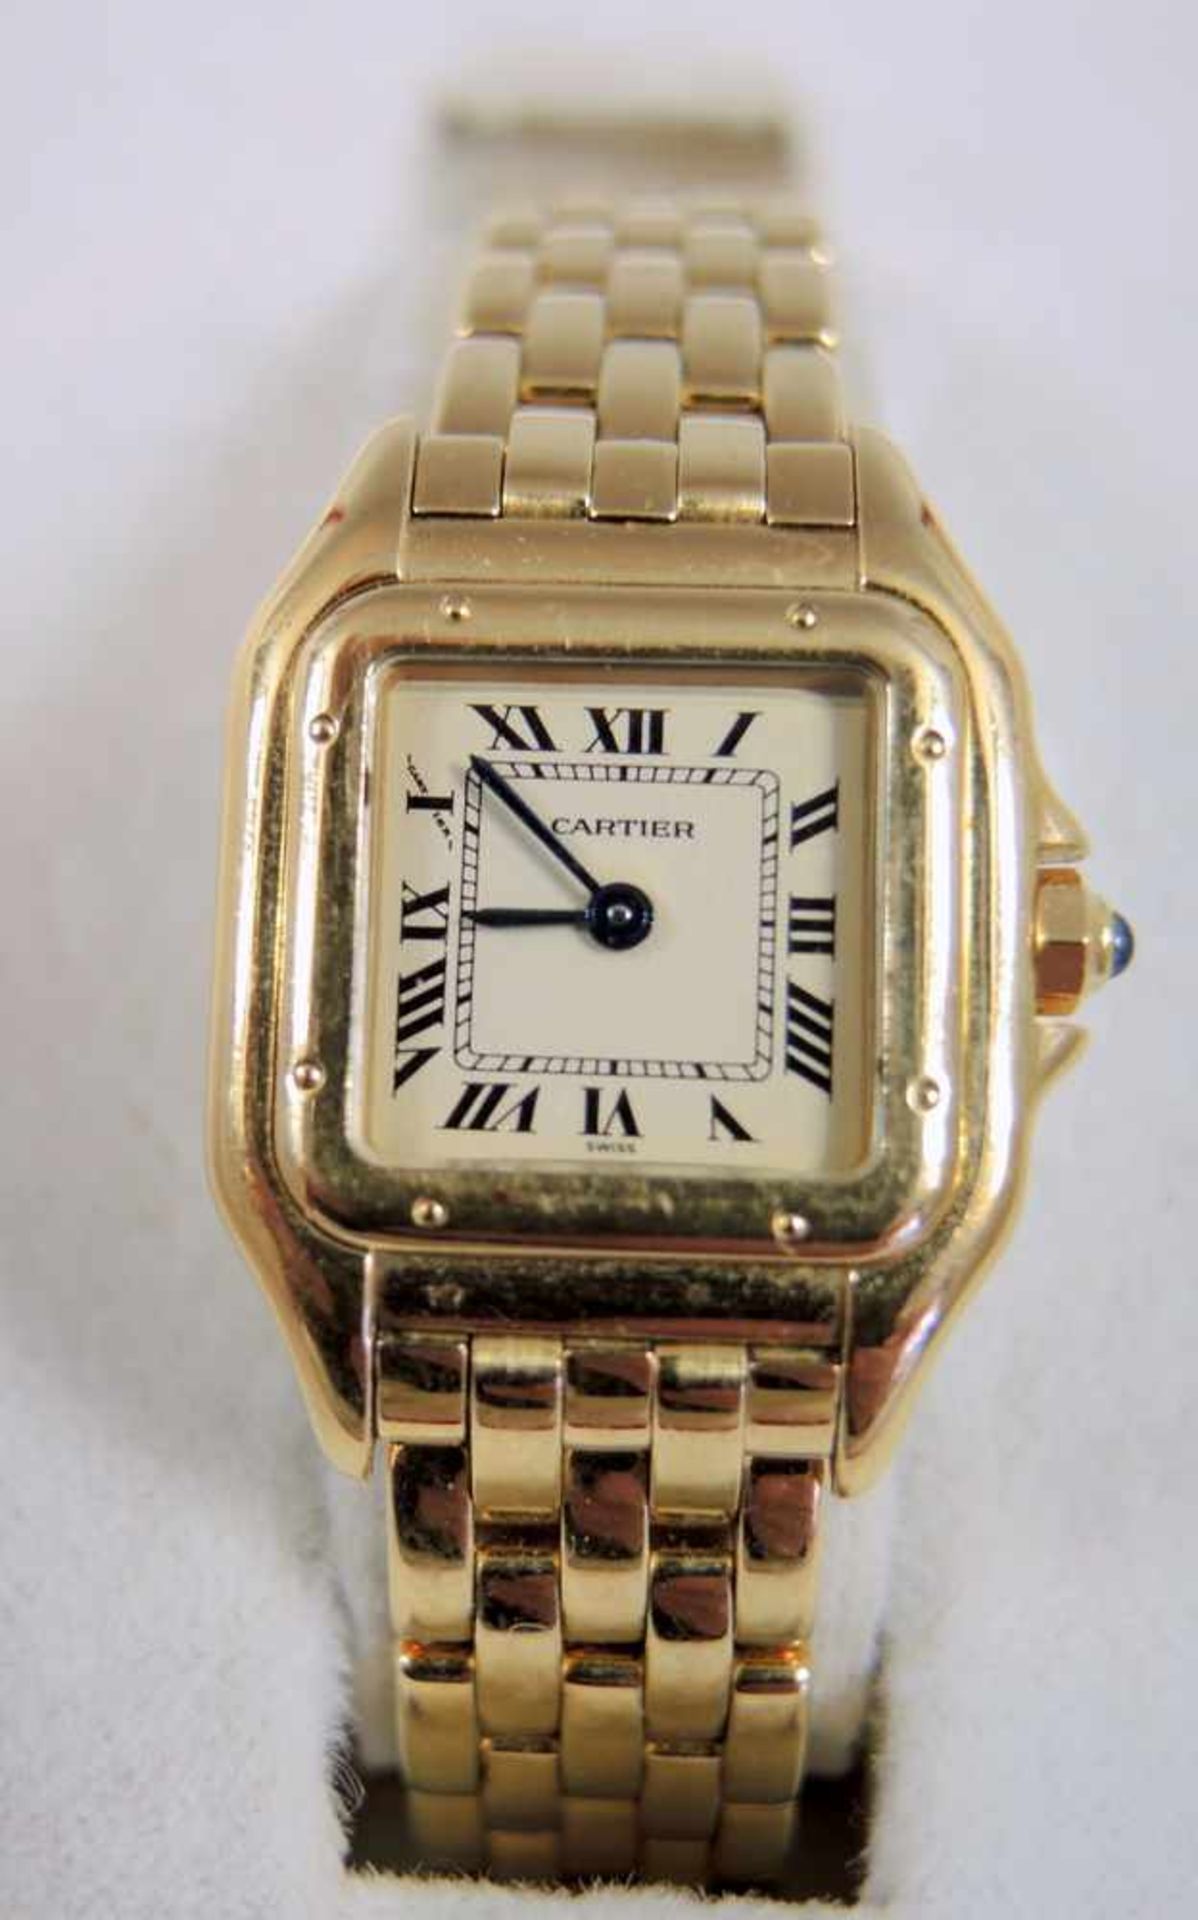 Cartier Armbanduhr Damen, Panthere in 18 K. Gold, Quarz. Mit Box, voll gangbar. 90er Jahre. - Bild 2 aus 3